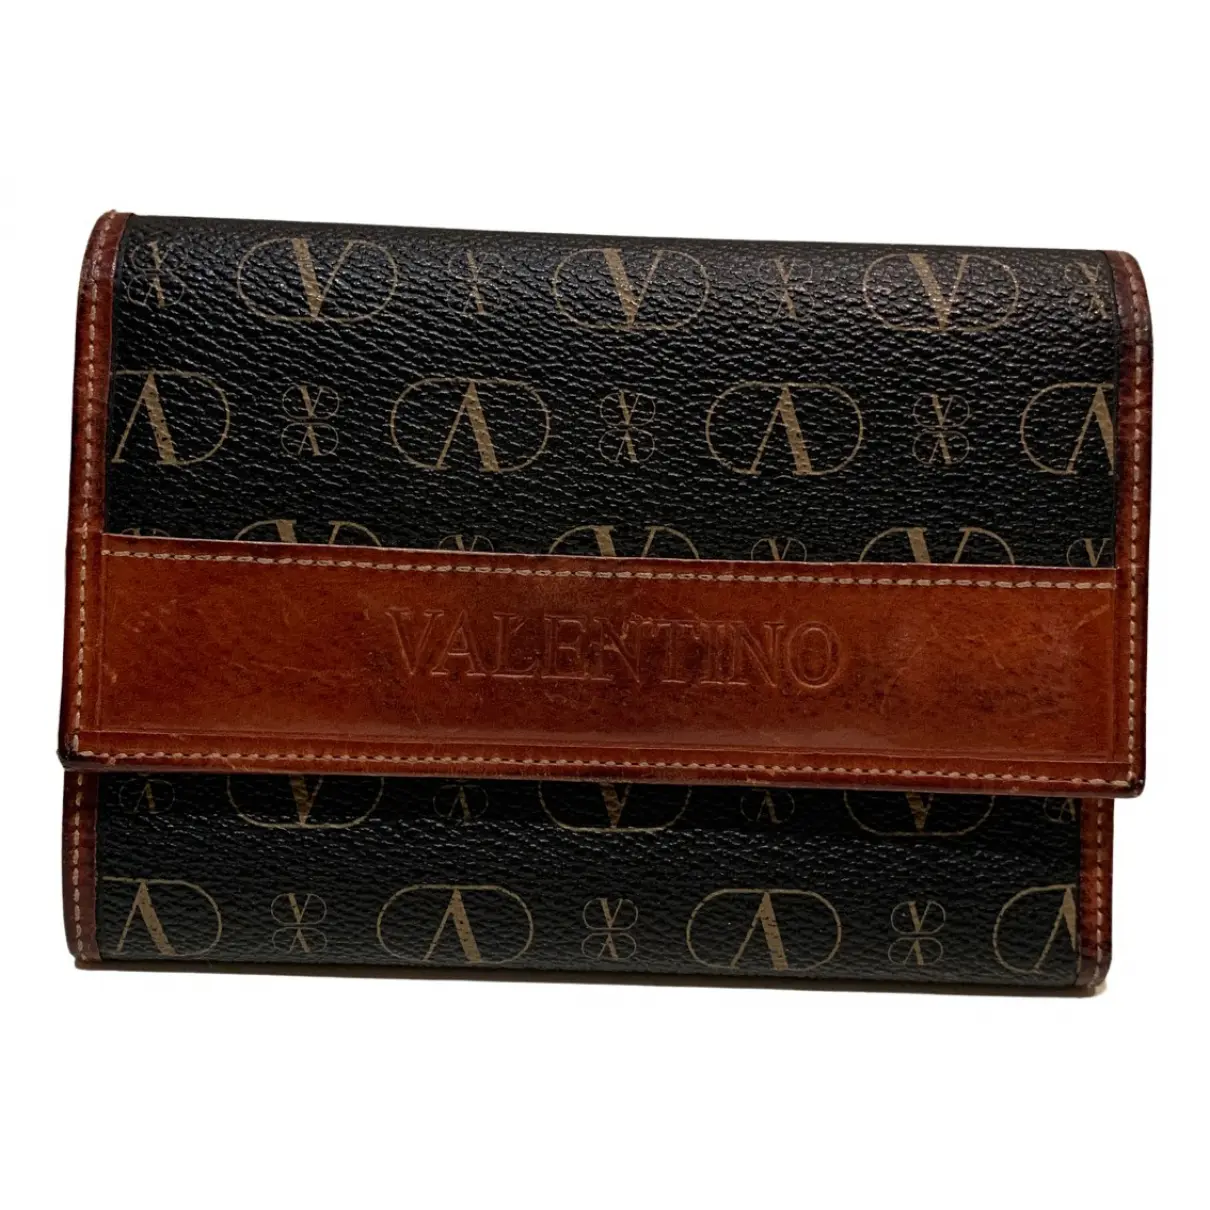 VLogo leather wallet Valentino Garavani - Vintage